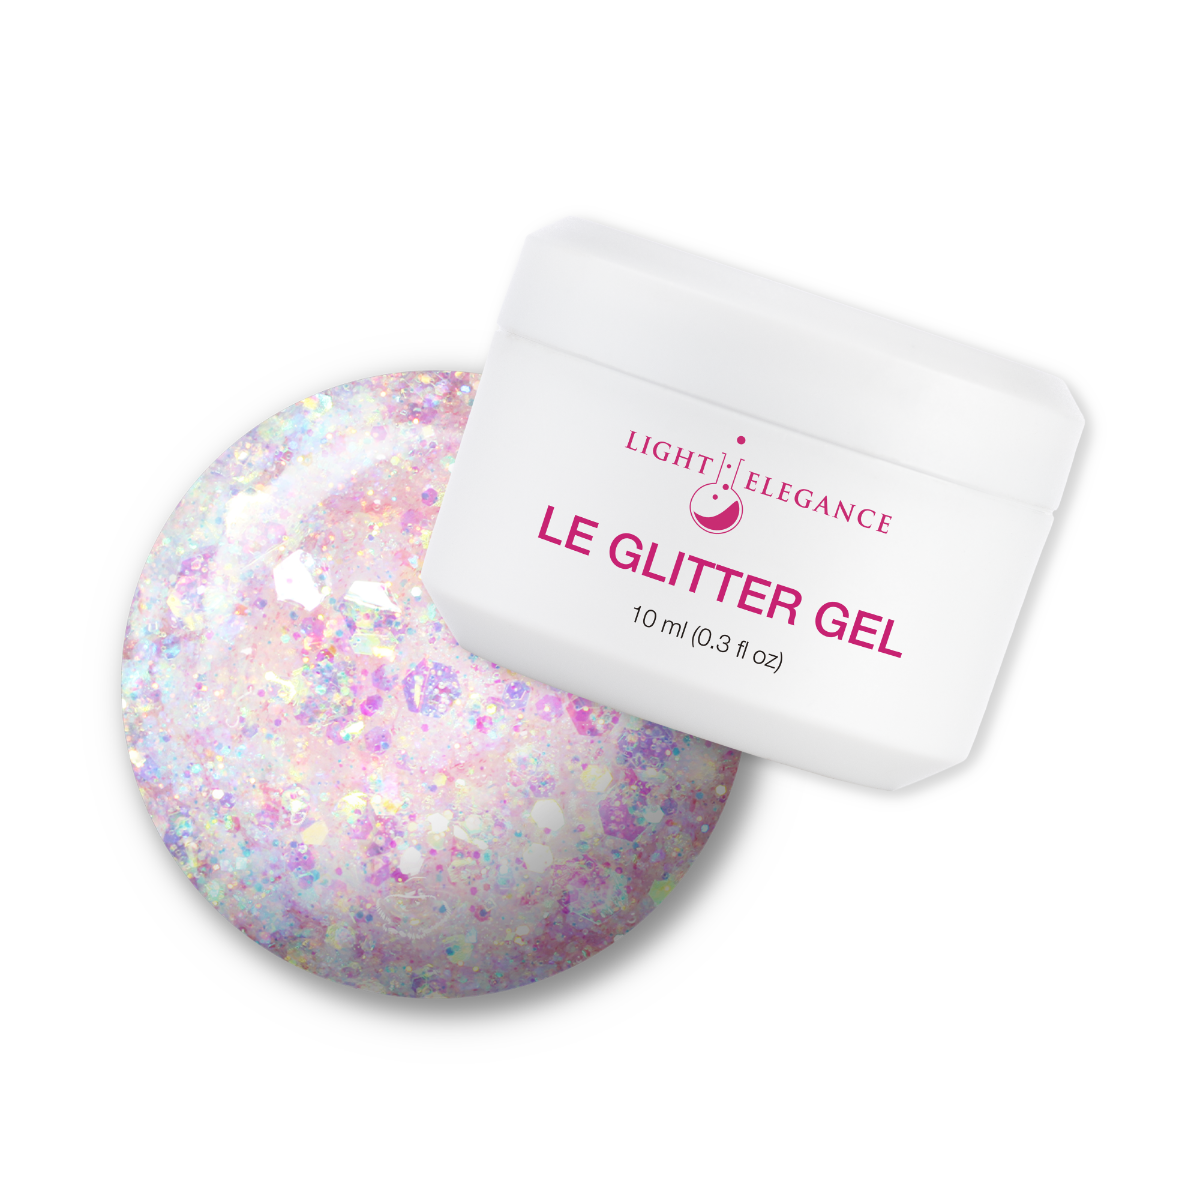 Light Elegance Glitter Gel - Fairy Good! :: New Packaging - Creata Beauty - Professional Beauty Products